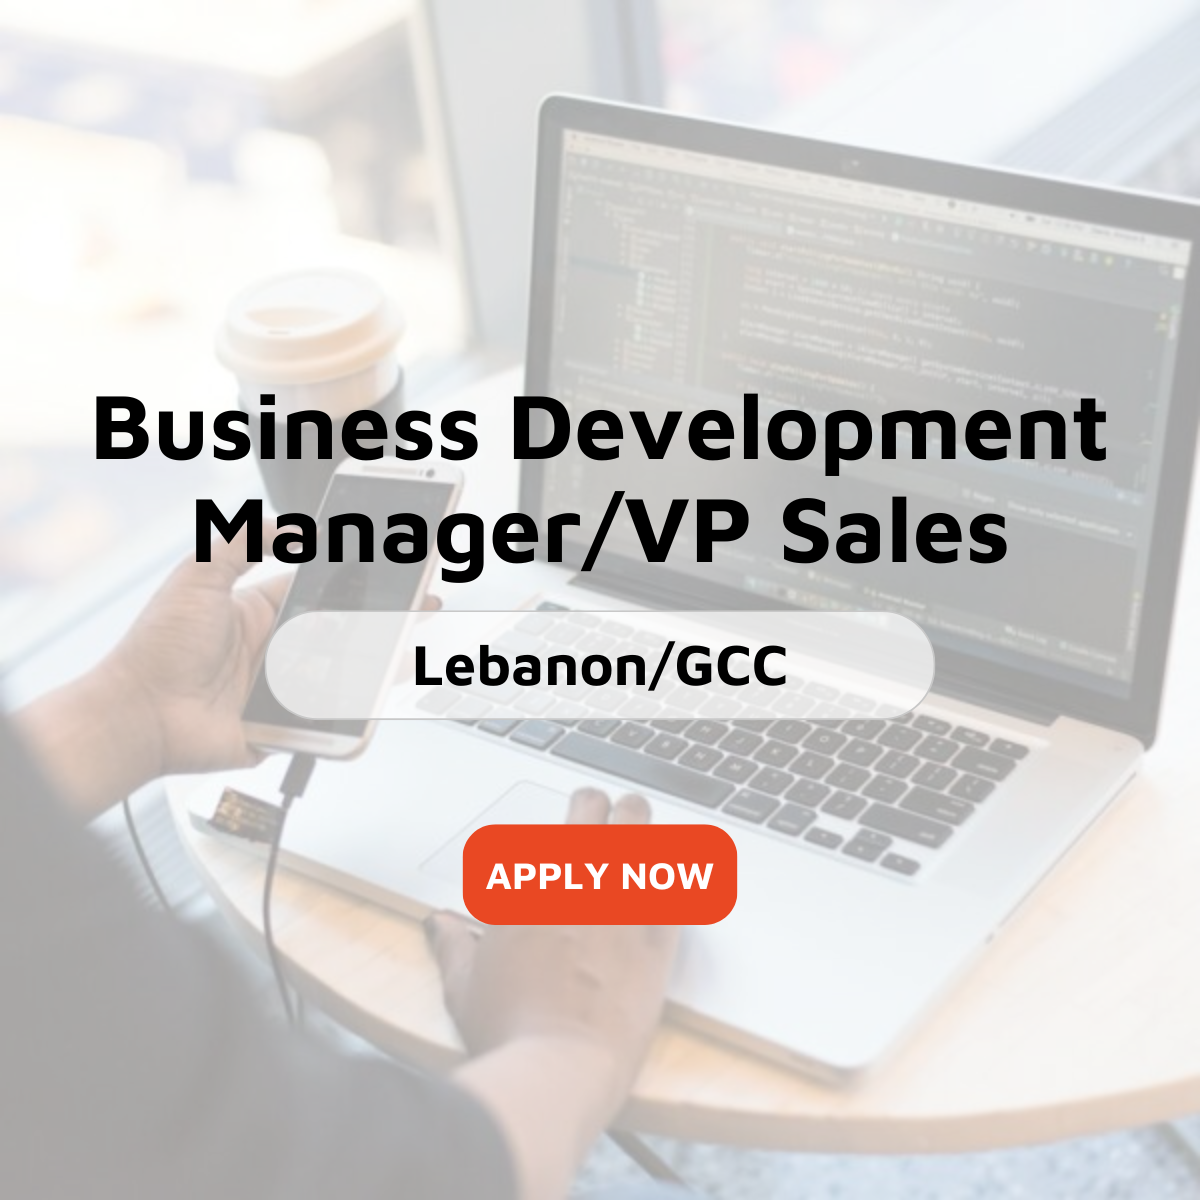 Business Development Manager/VP Sales